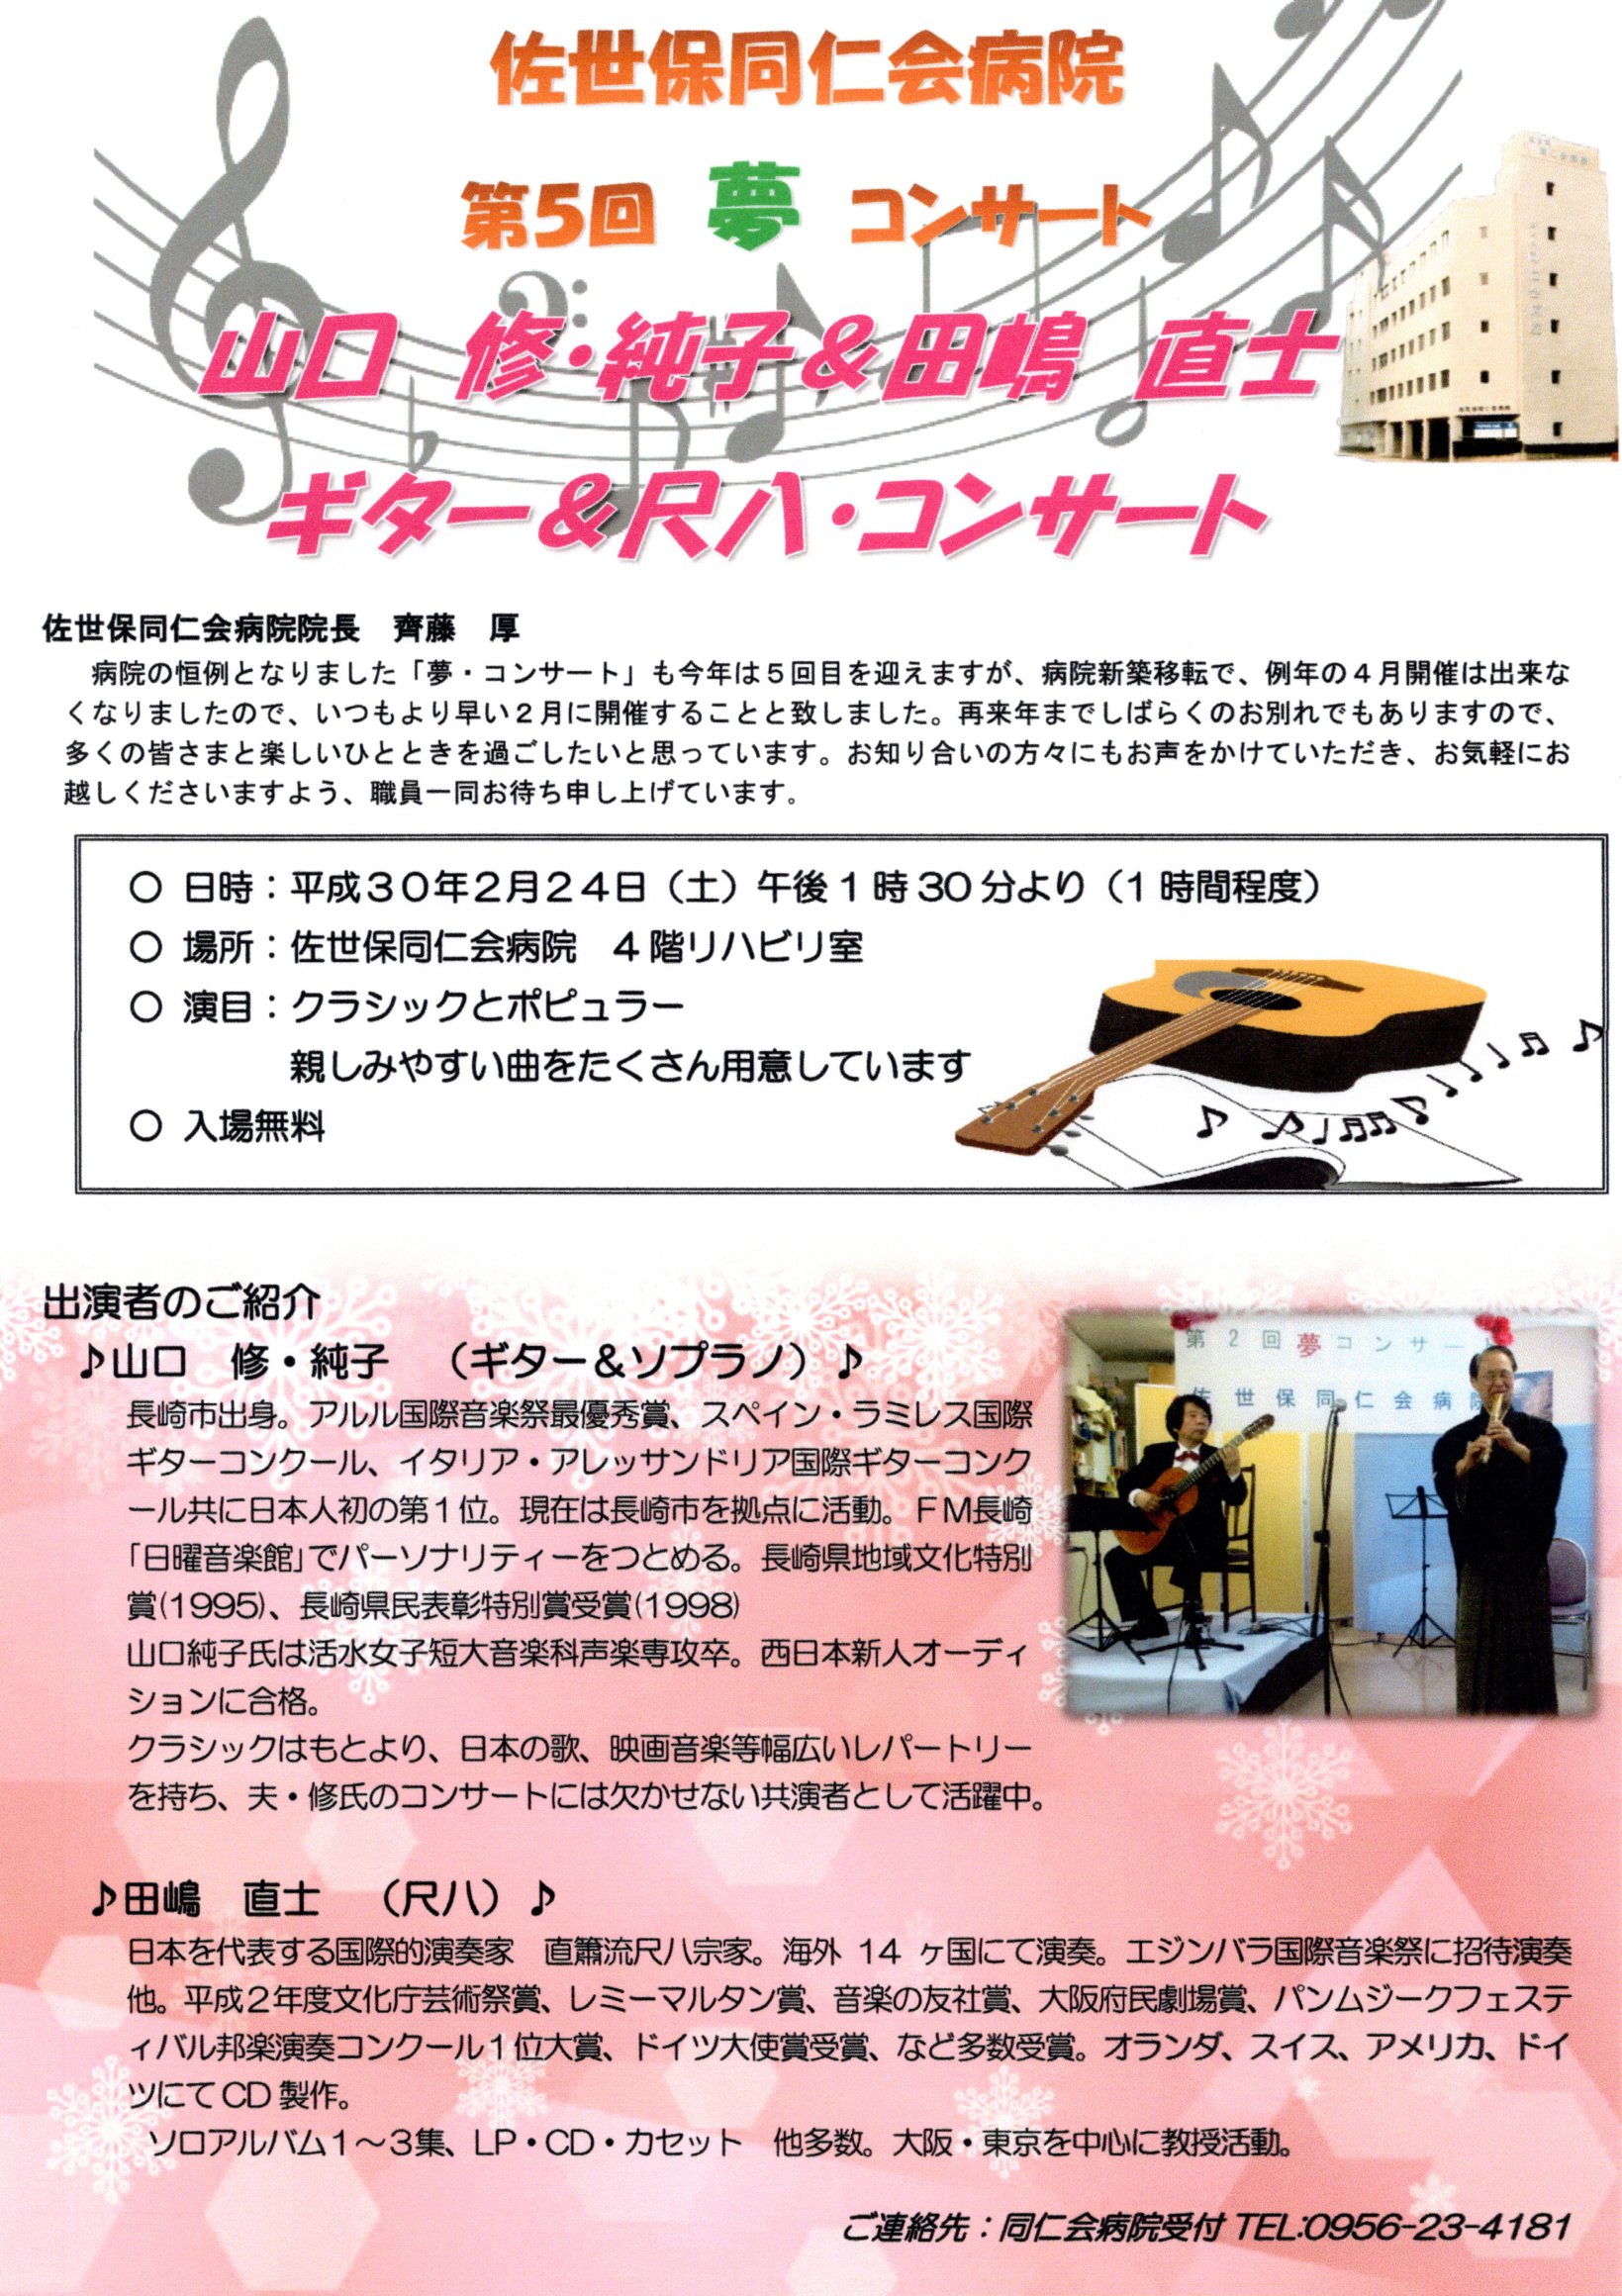 http://www.sasebo-doujinkai.com/doujinkai/entry/poster5.jpg